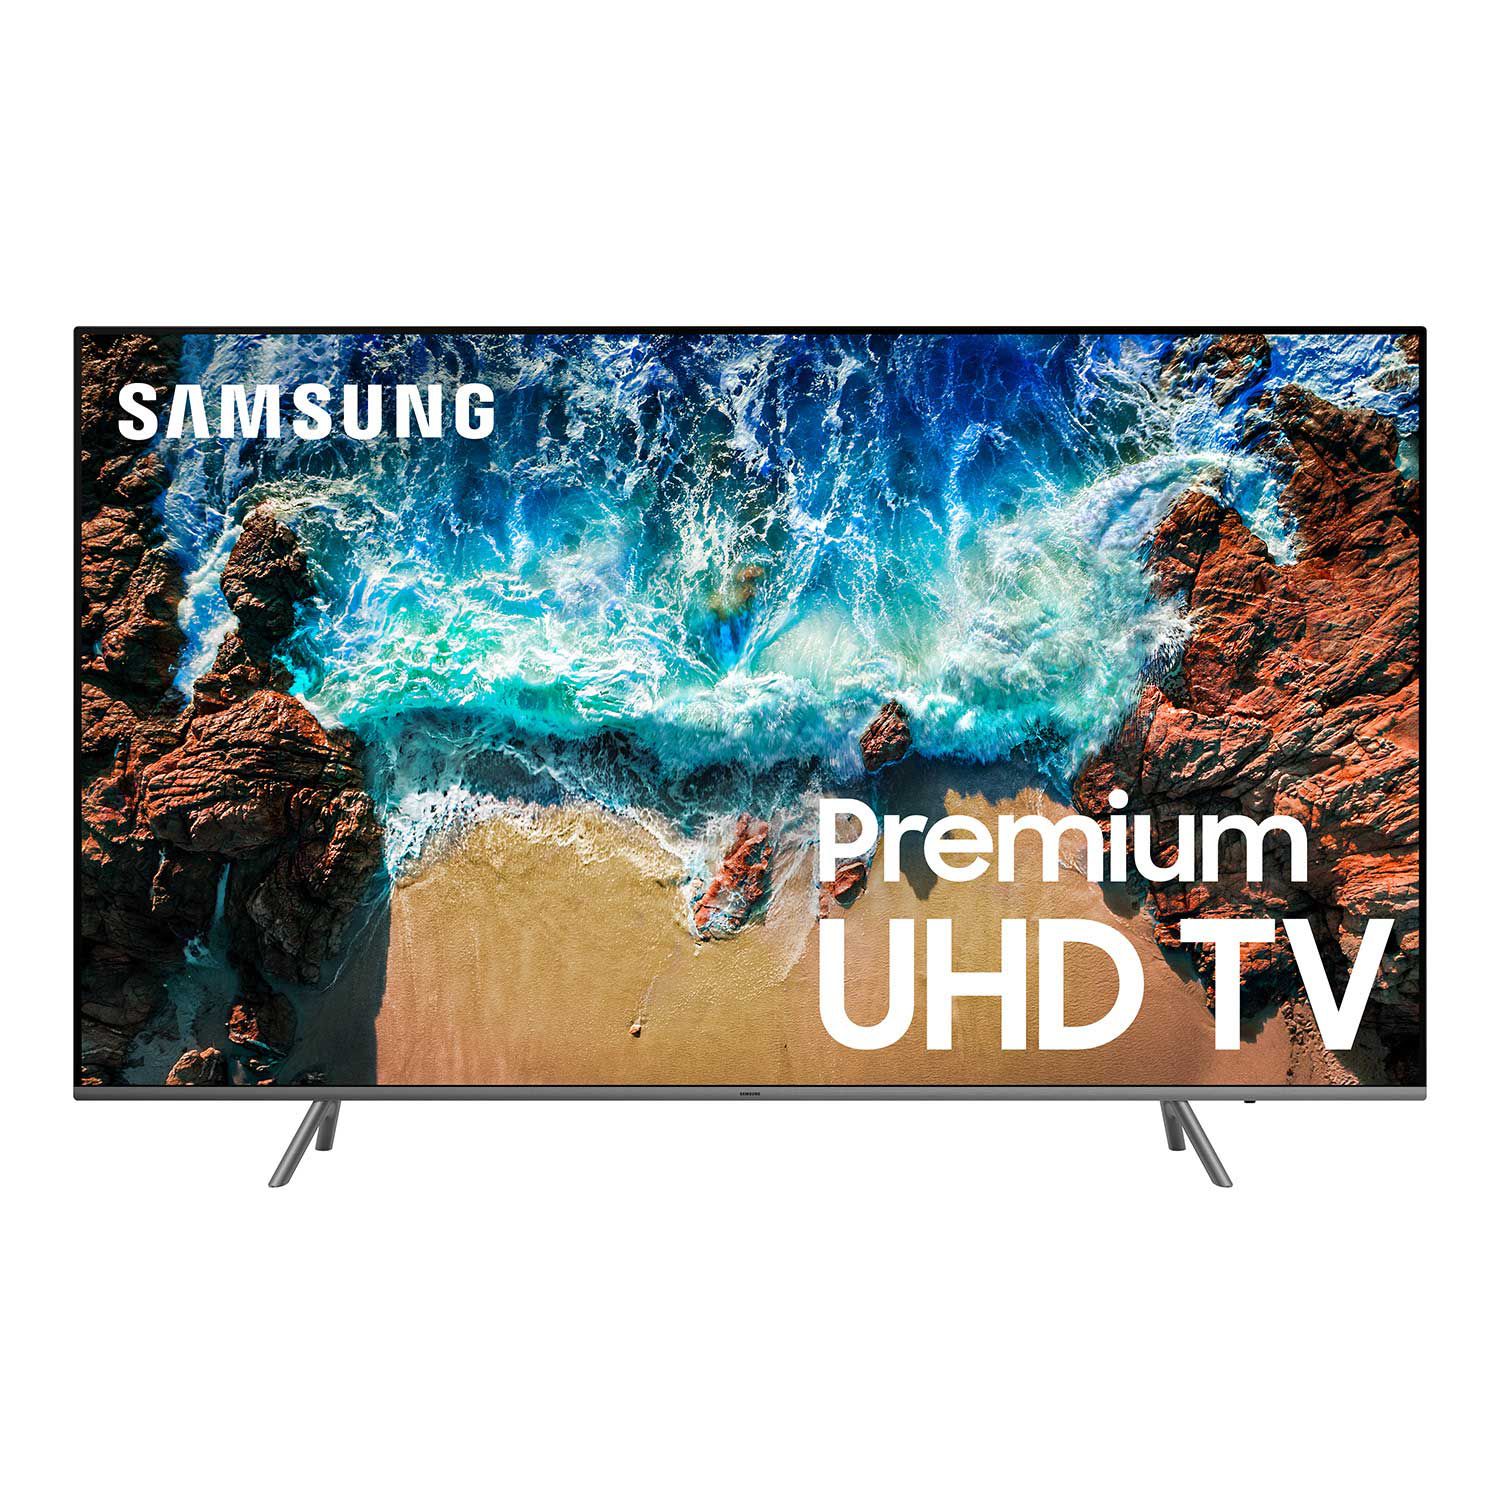 Samsung UN82NU800DFXZA 82″ 4K 2160p Ultra HD Smart LED TV with HDR